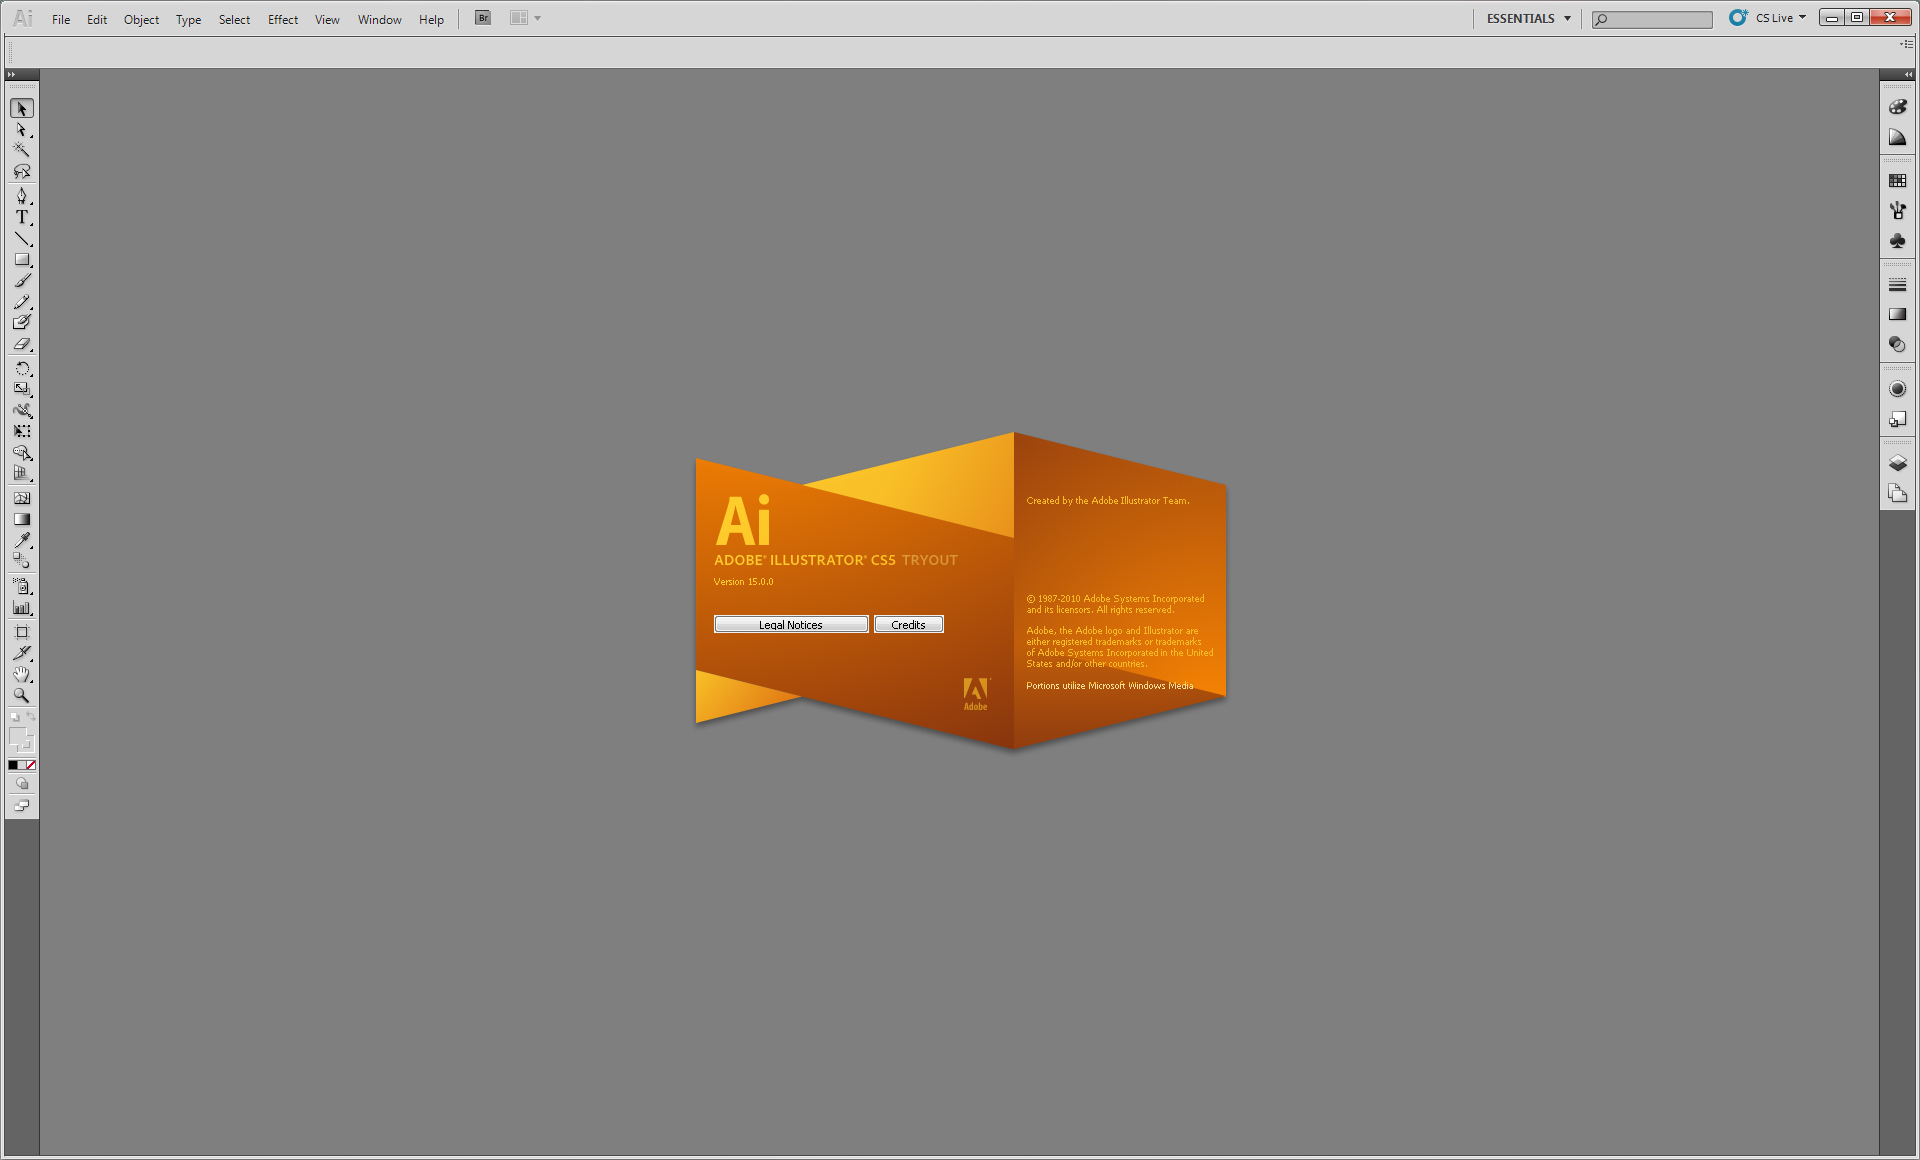 Adobe illustrator windows 7 64 bit